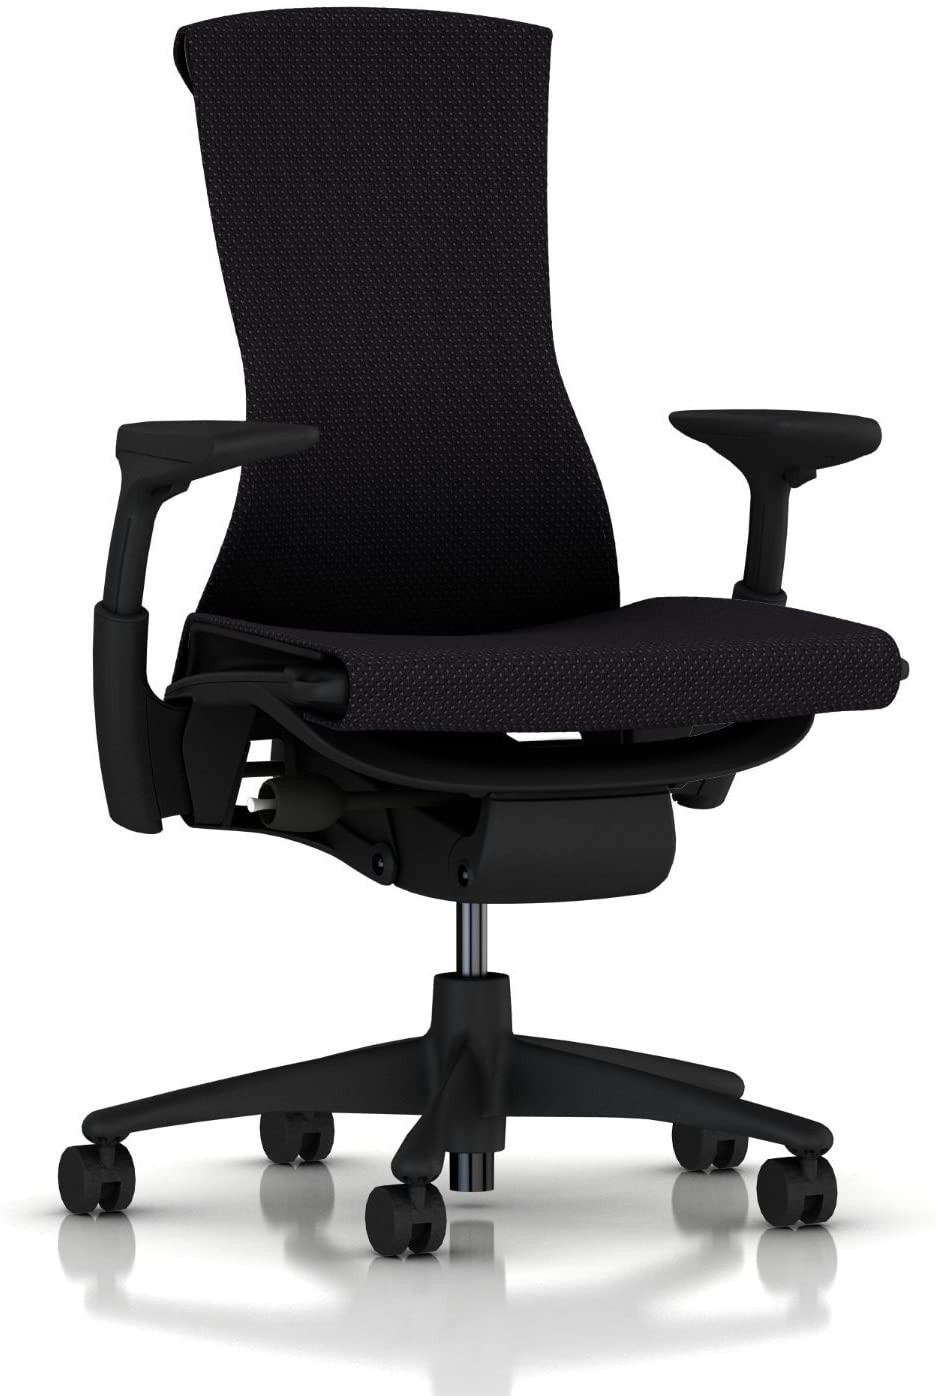 Duramont Ergonomic Adjustable Office Chair Canada